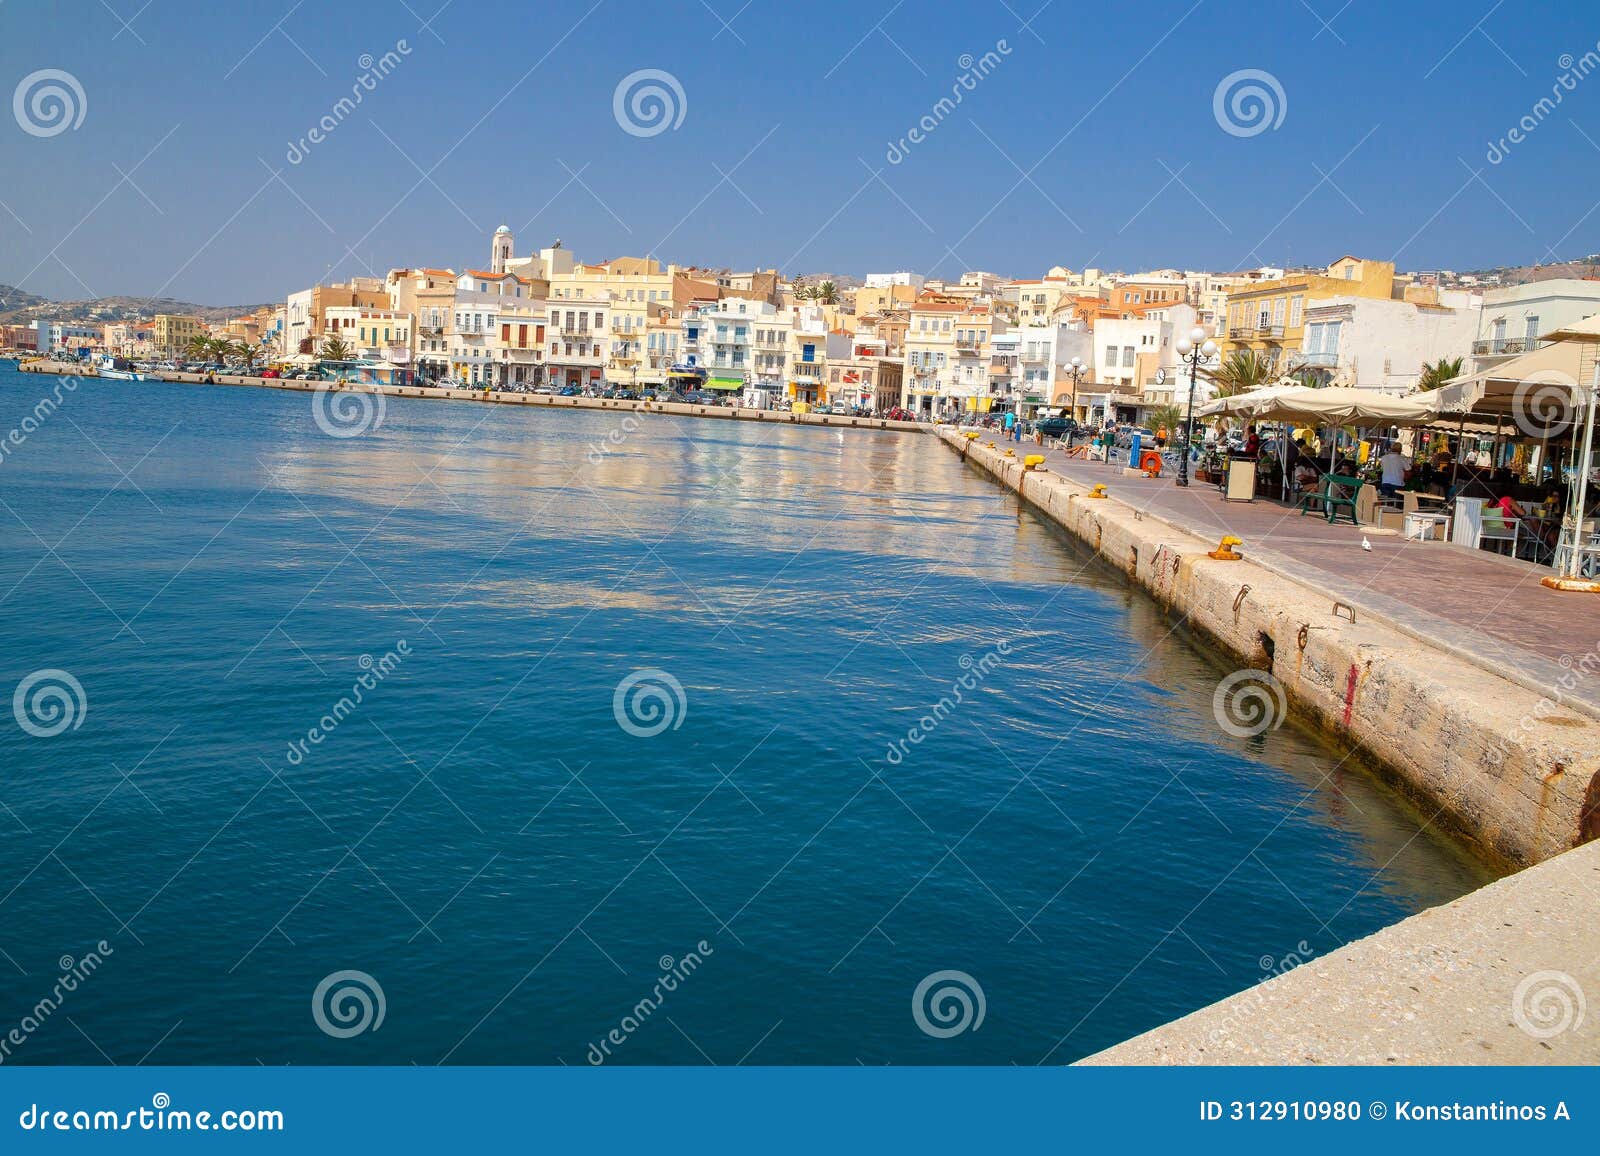 siros or syros island greece hermoupoli city in summer season